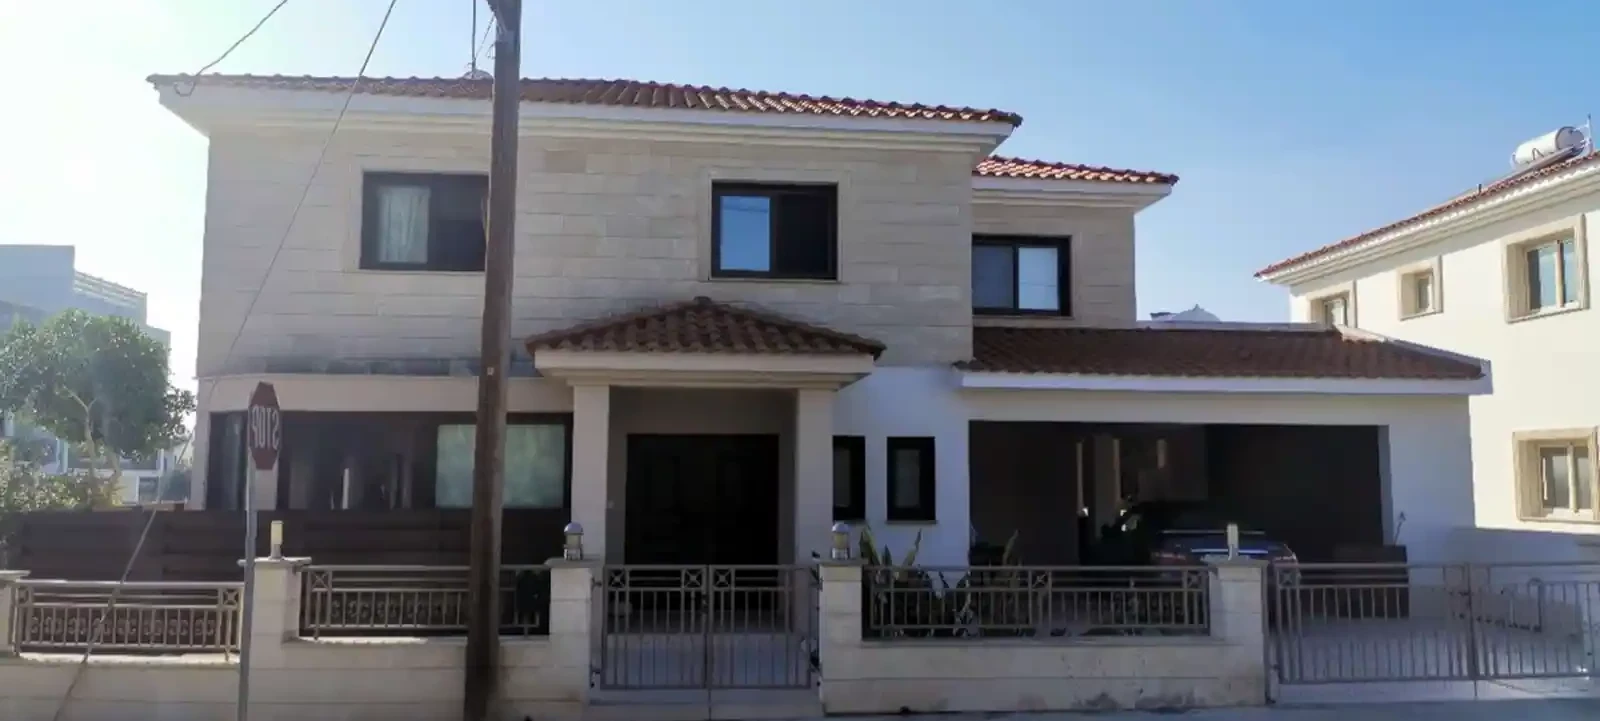 5-bedroom villa fоr sаle €890.000, image 1